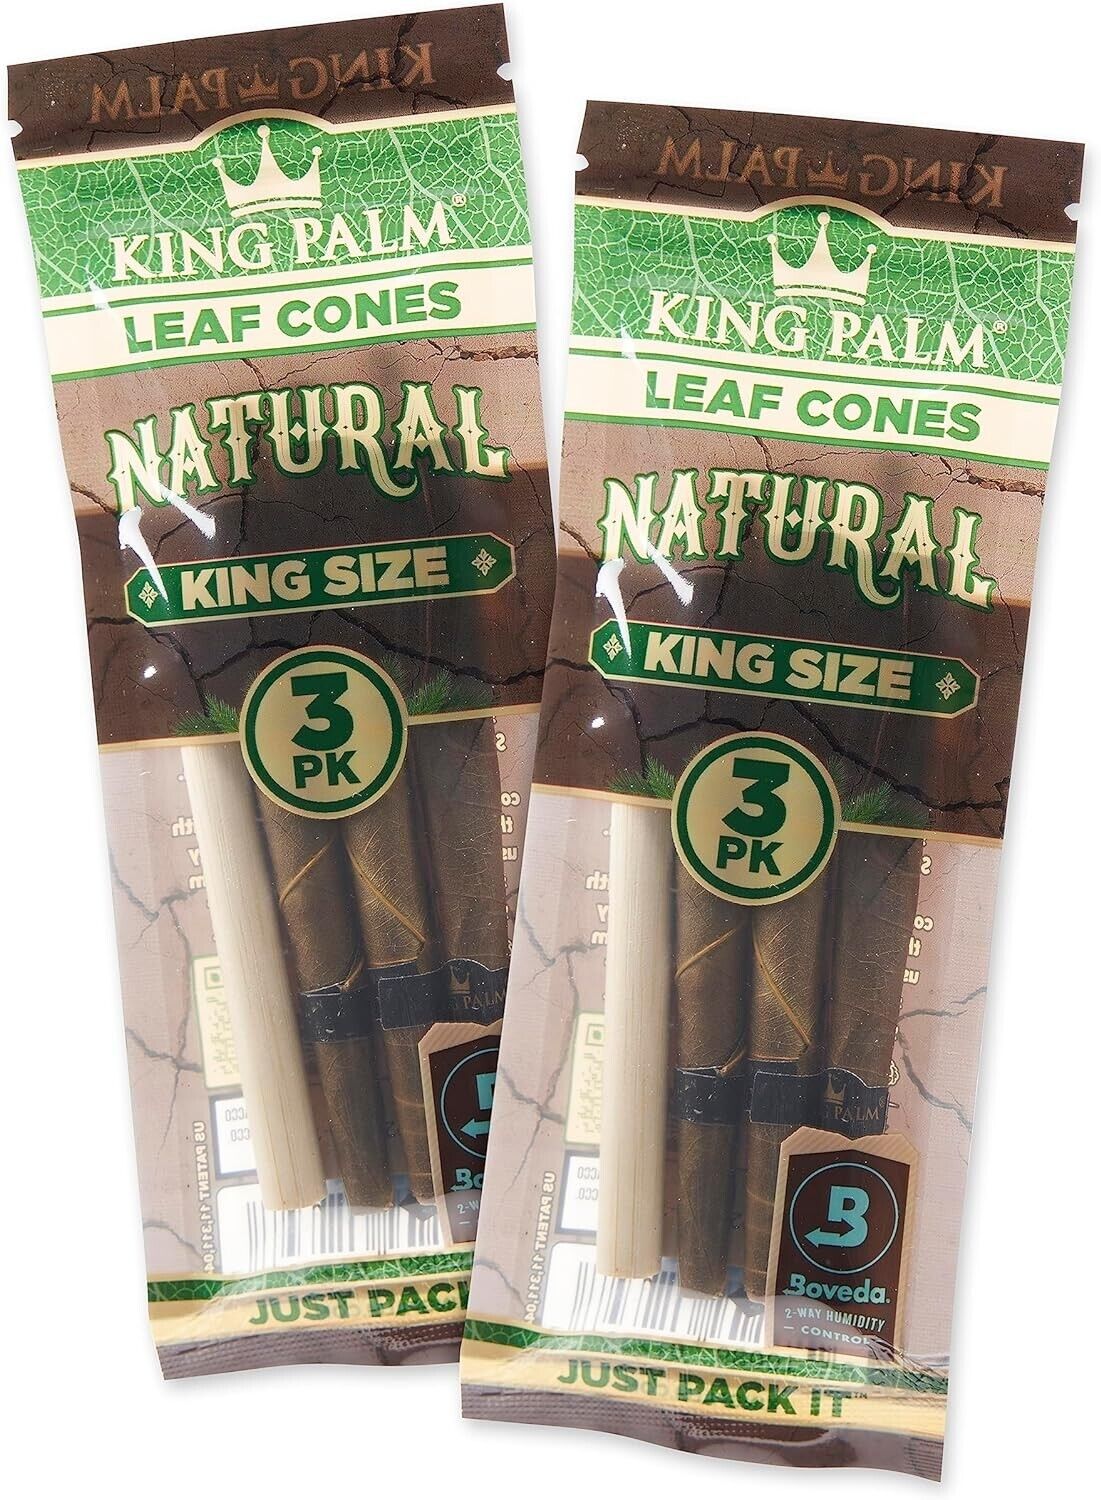 King Palm | King Size | Natural | Palm Leaf Rolls | 2 Packs of 3 Each = 6 Rolls